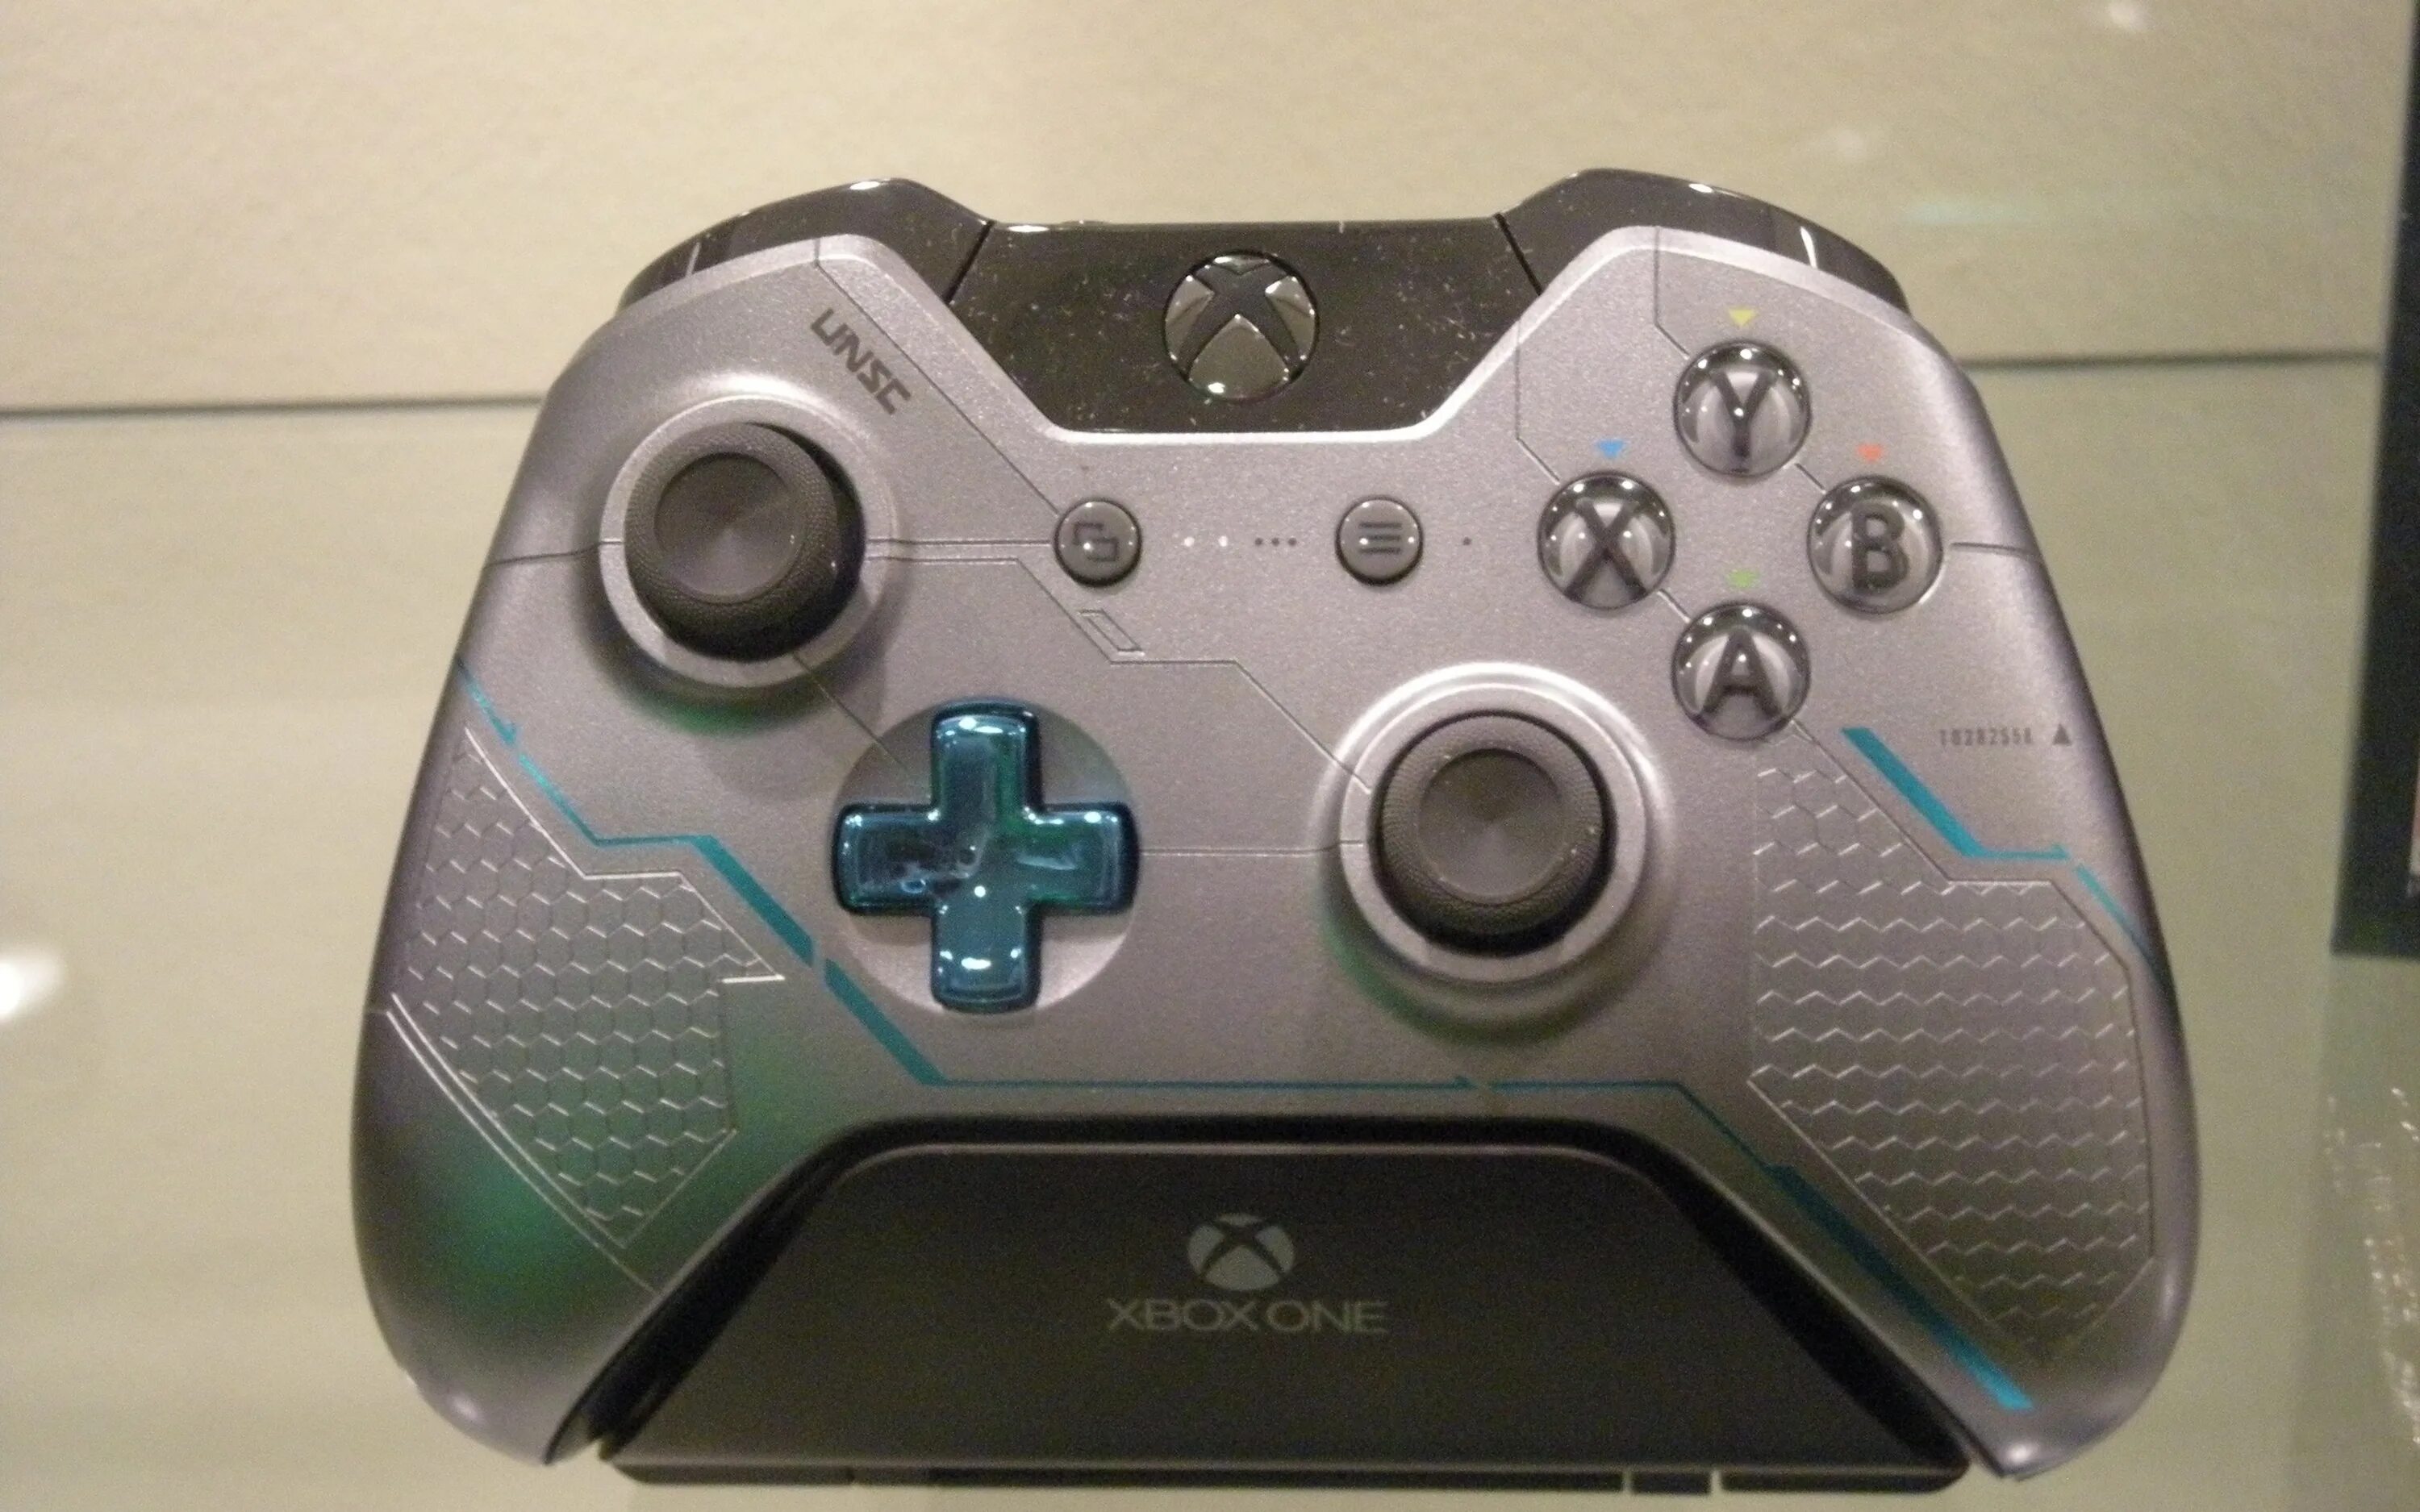 Forza джойстик. Xbox one Halo 5 Limited Edition. Xbox 360 Limited Edition Halo 4 джойстик. Xbox one Limited Edition Forza. Xbox геймпад Форза.